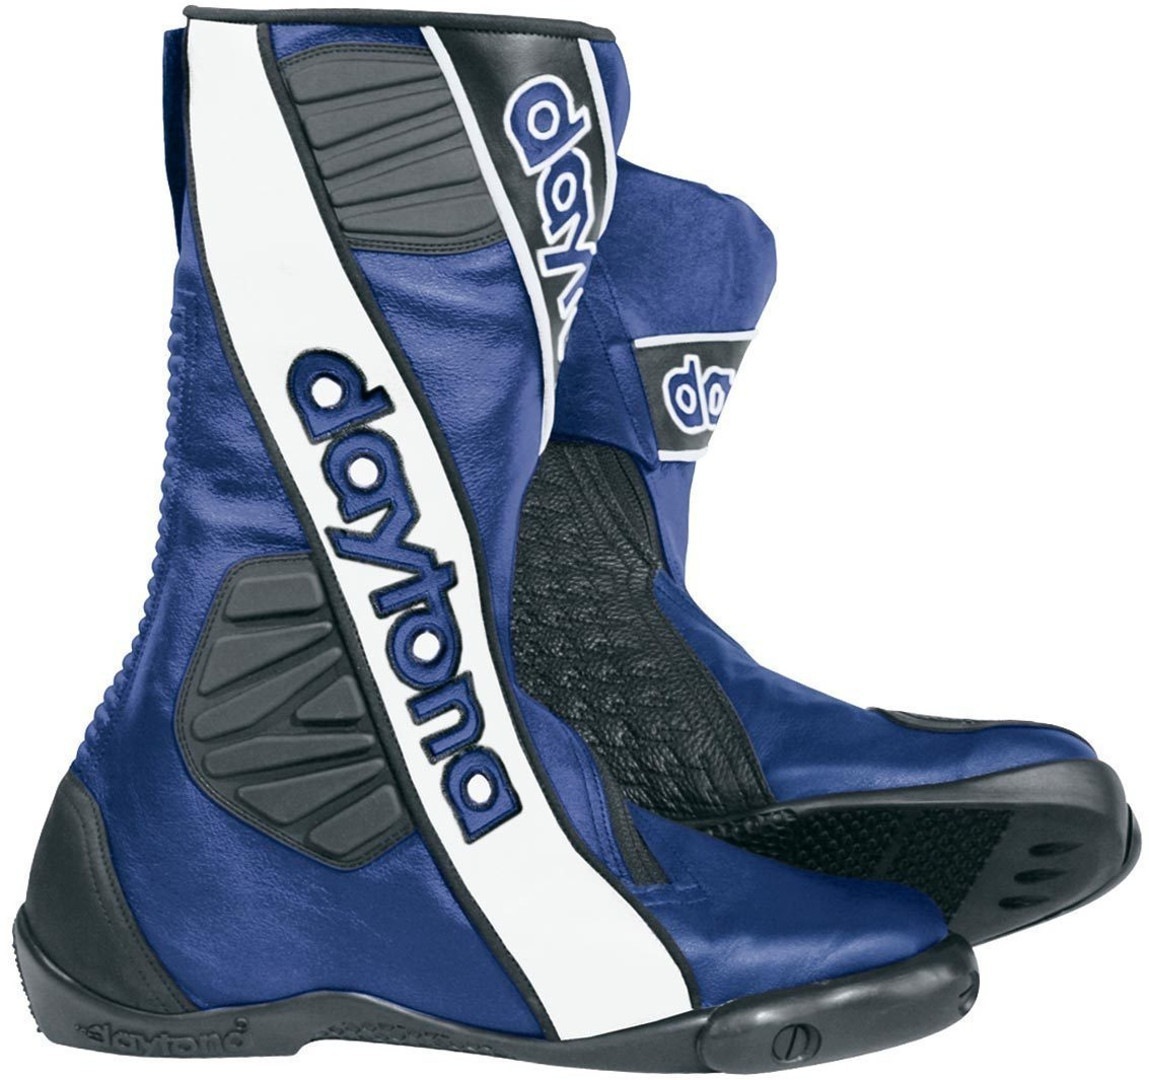 Daytona Security Evo G3 Motorcycle Boots, black-white-blue, Size 47, black-white-blue, Size 47